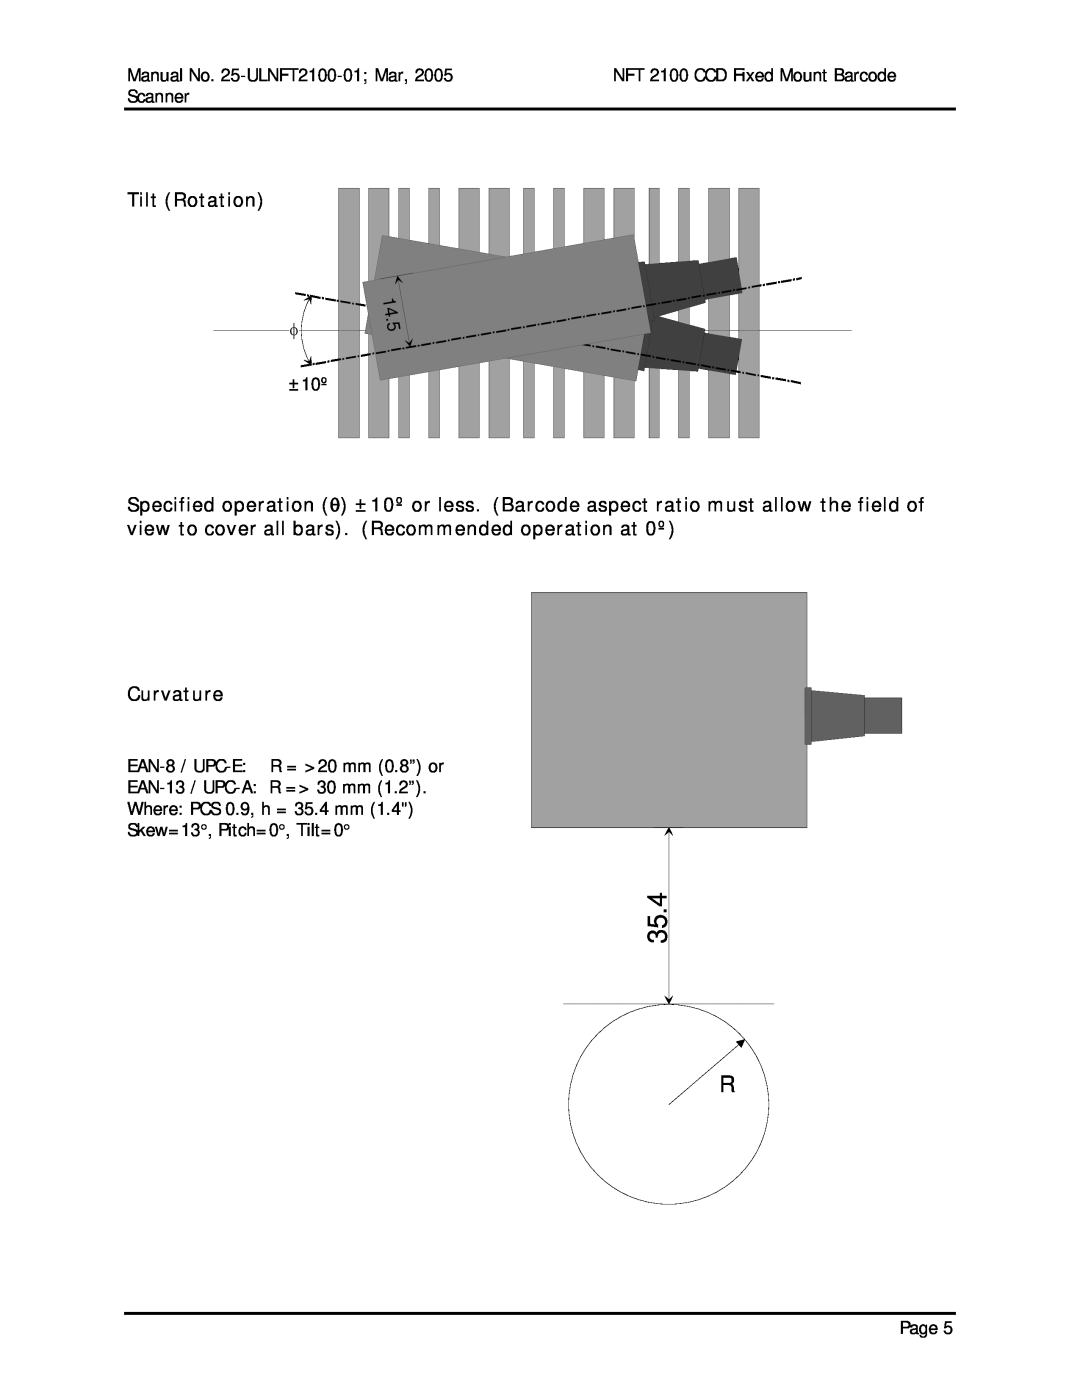 Opticon NFT 2100 manual Tilt Rotation, Curvature, 35.4 